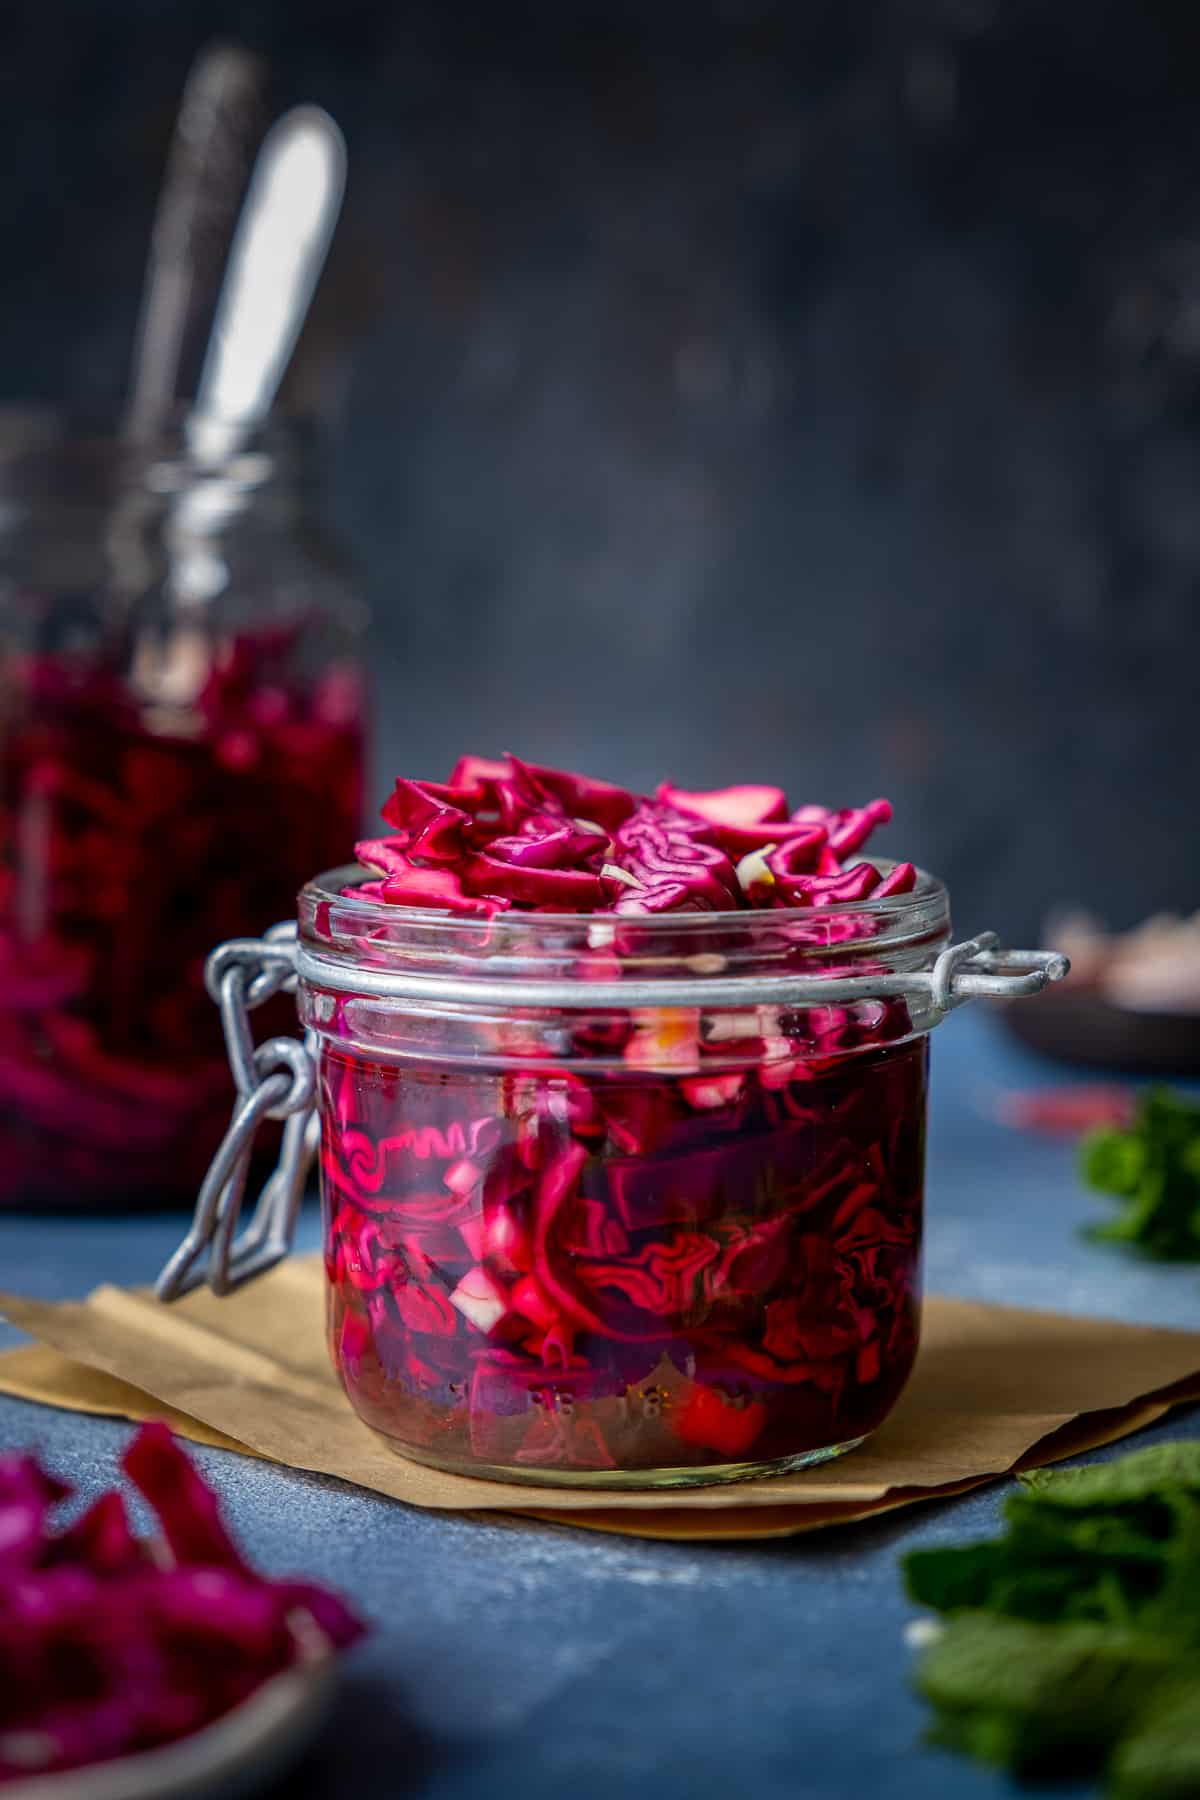 Red cabbage pickle in a jar on a dark background.